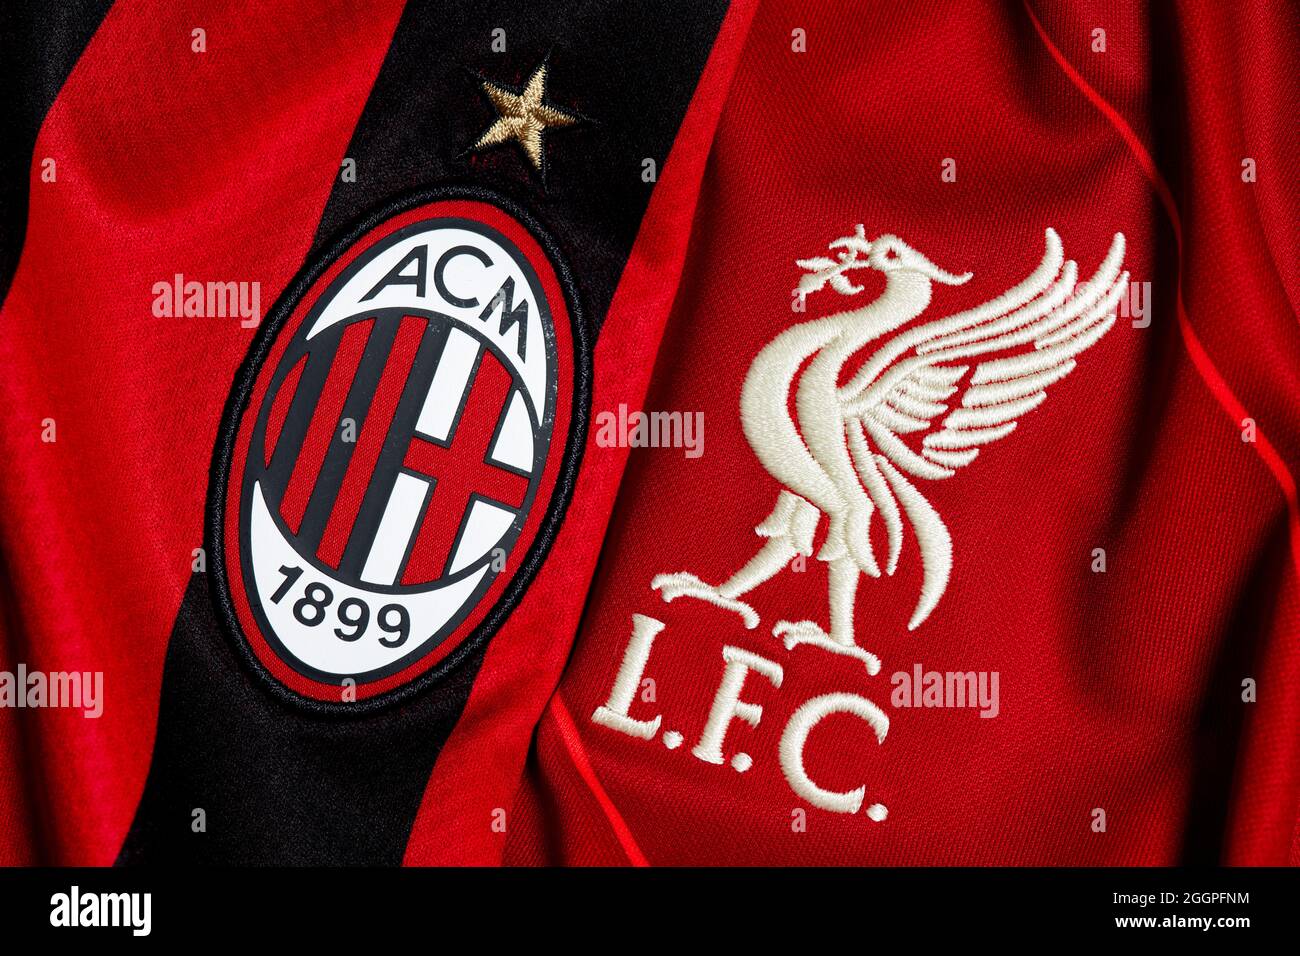 Sui Trampe Theseus Close up of AC Milan & Liverpool FC club crest Stock Photo - Alamy